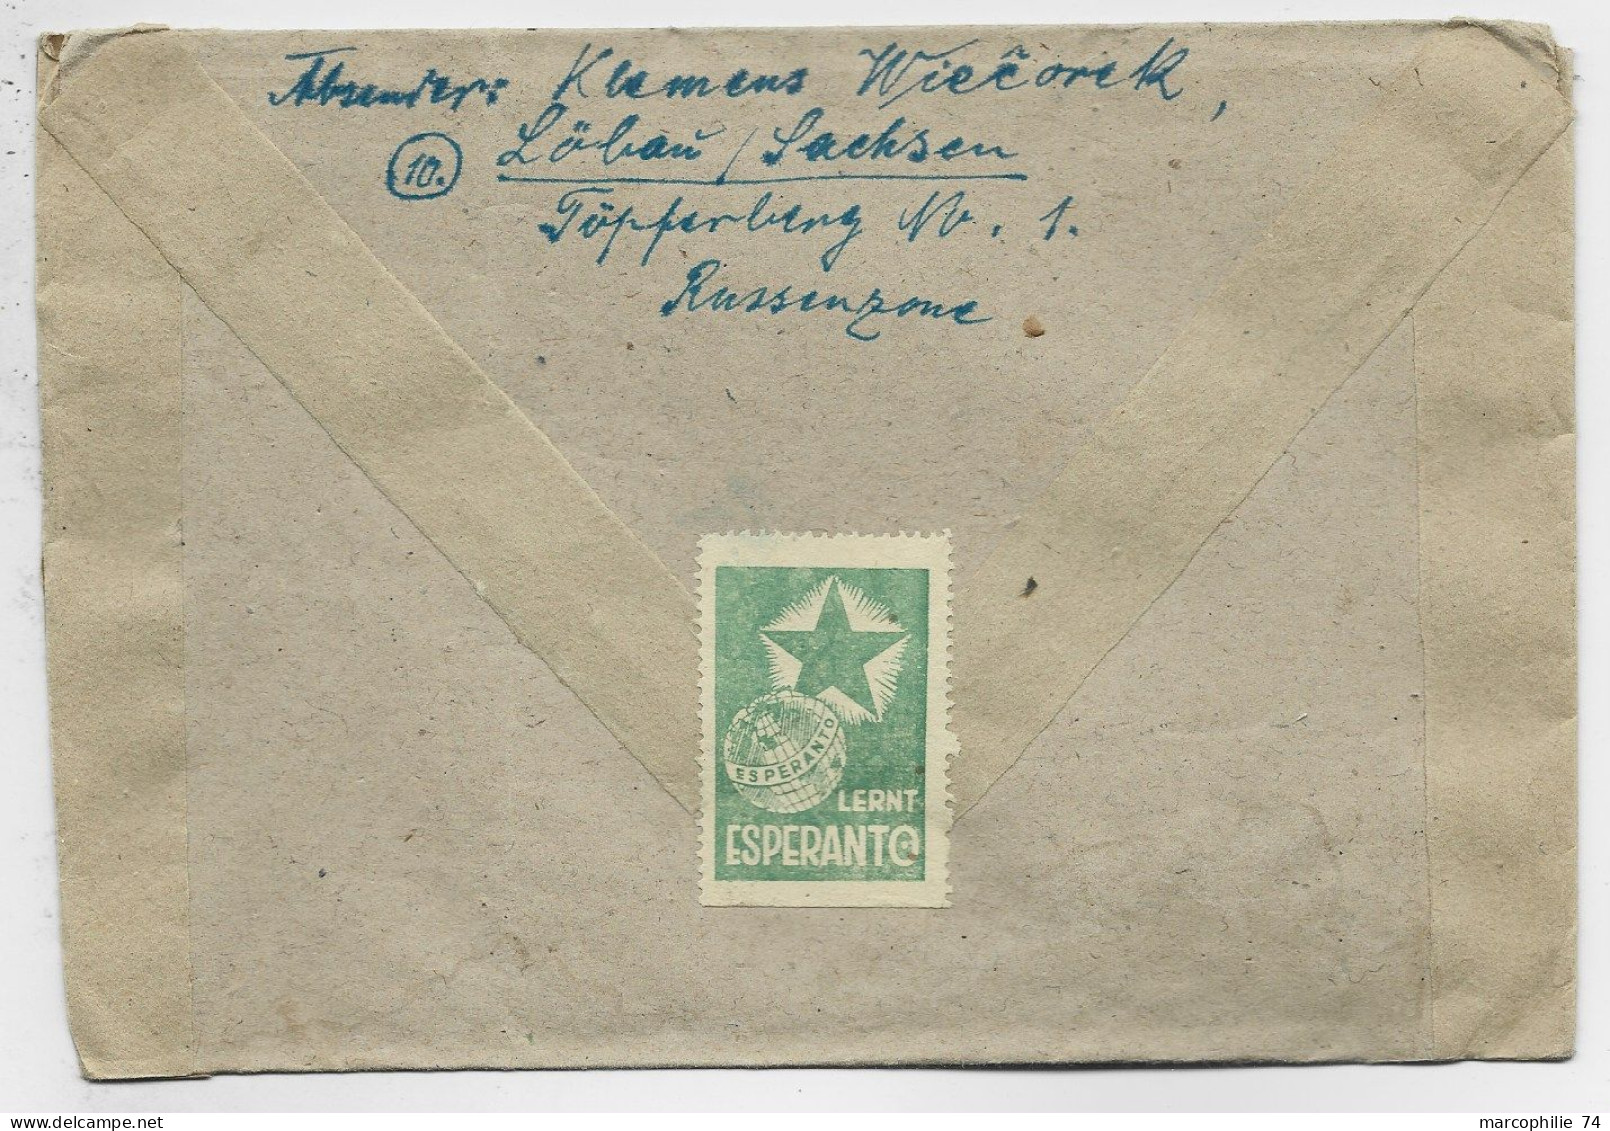 GERMANY 75C POST SOLO LETTRE COVER BRIEF LOBAU 1946 + VIGNETTE ESPERENTO LERNT TO GENEVE SUISSE - Covers & Documents